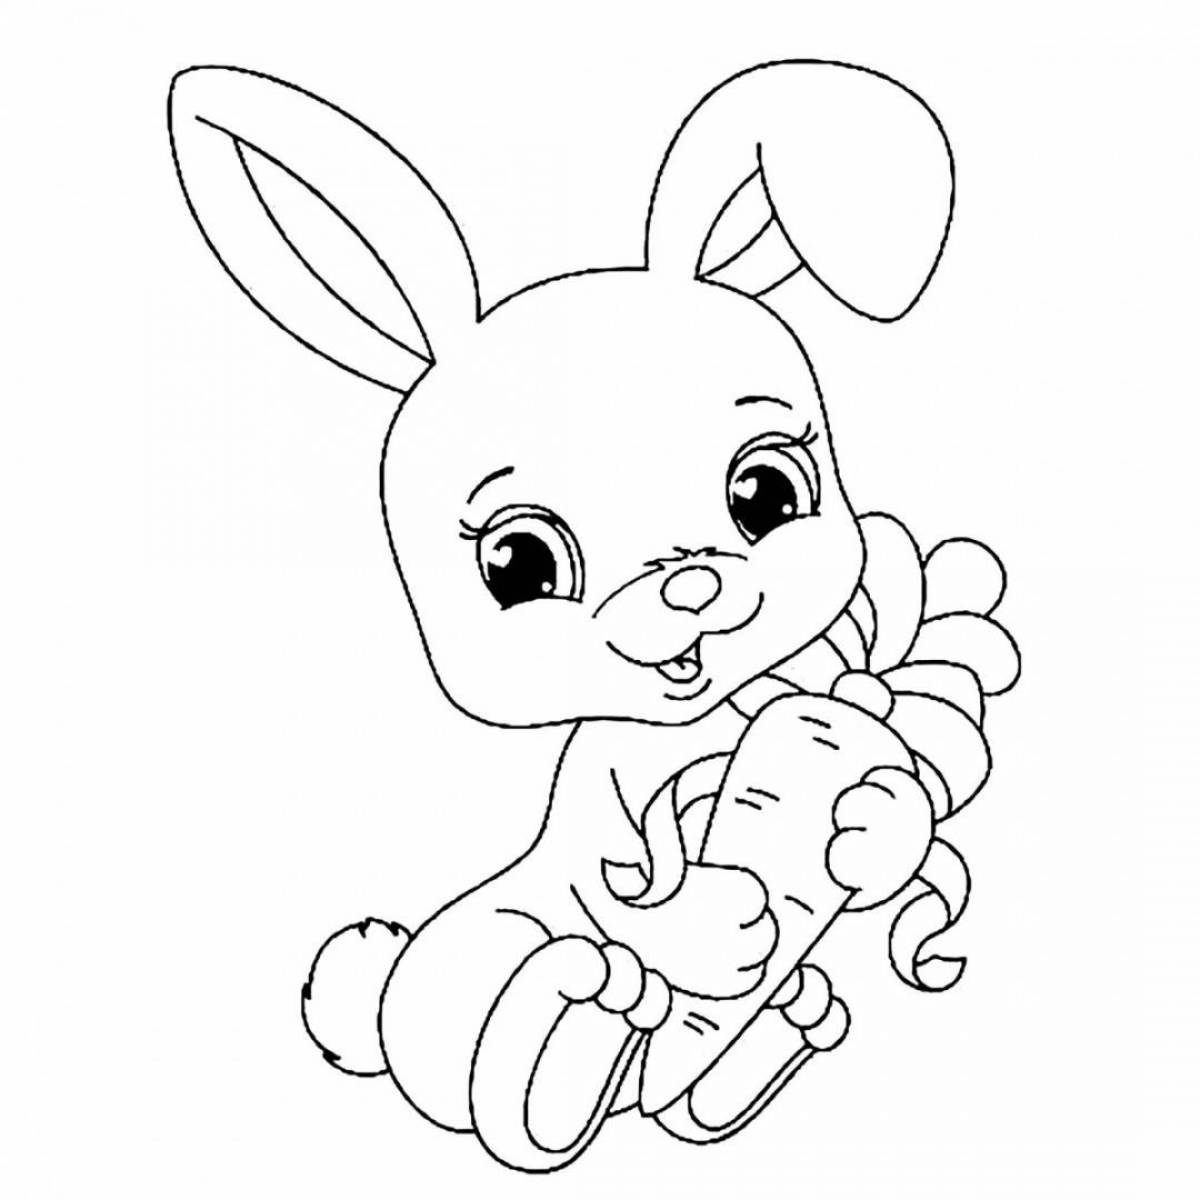 Развлекательная раскраска заяц для детей 3-4 лет